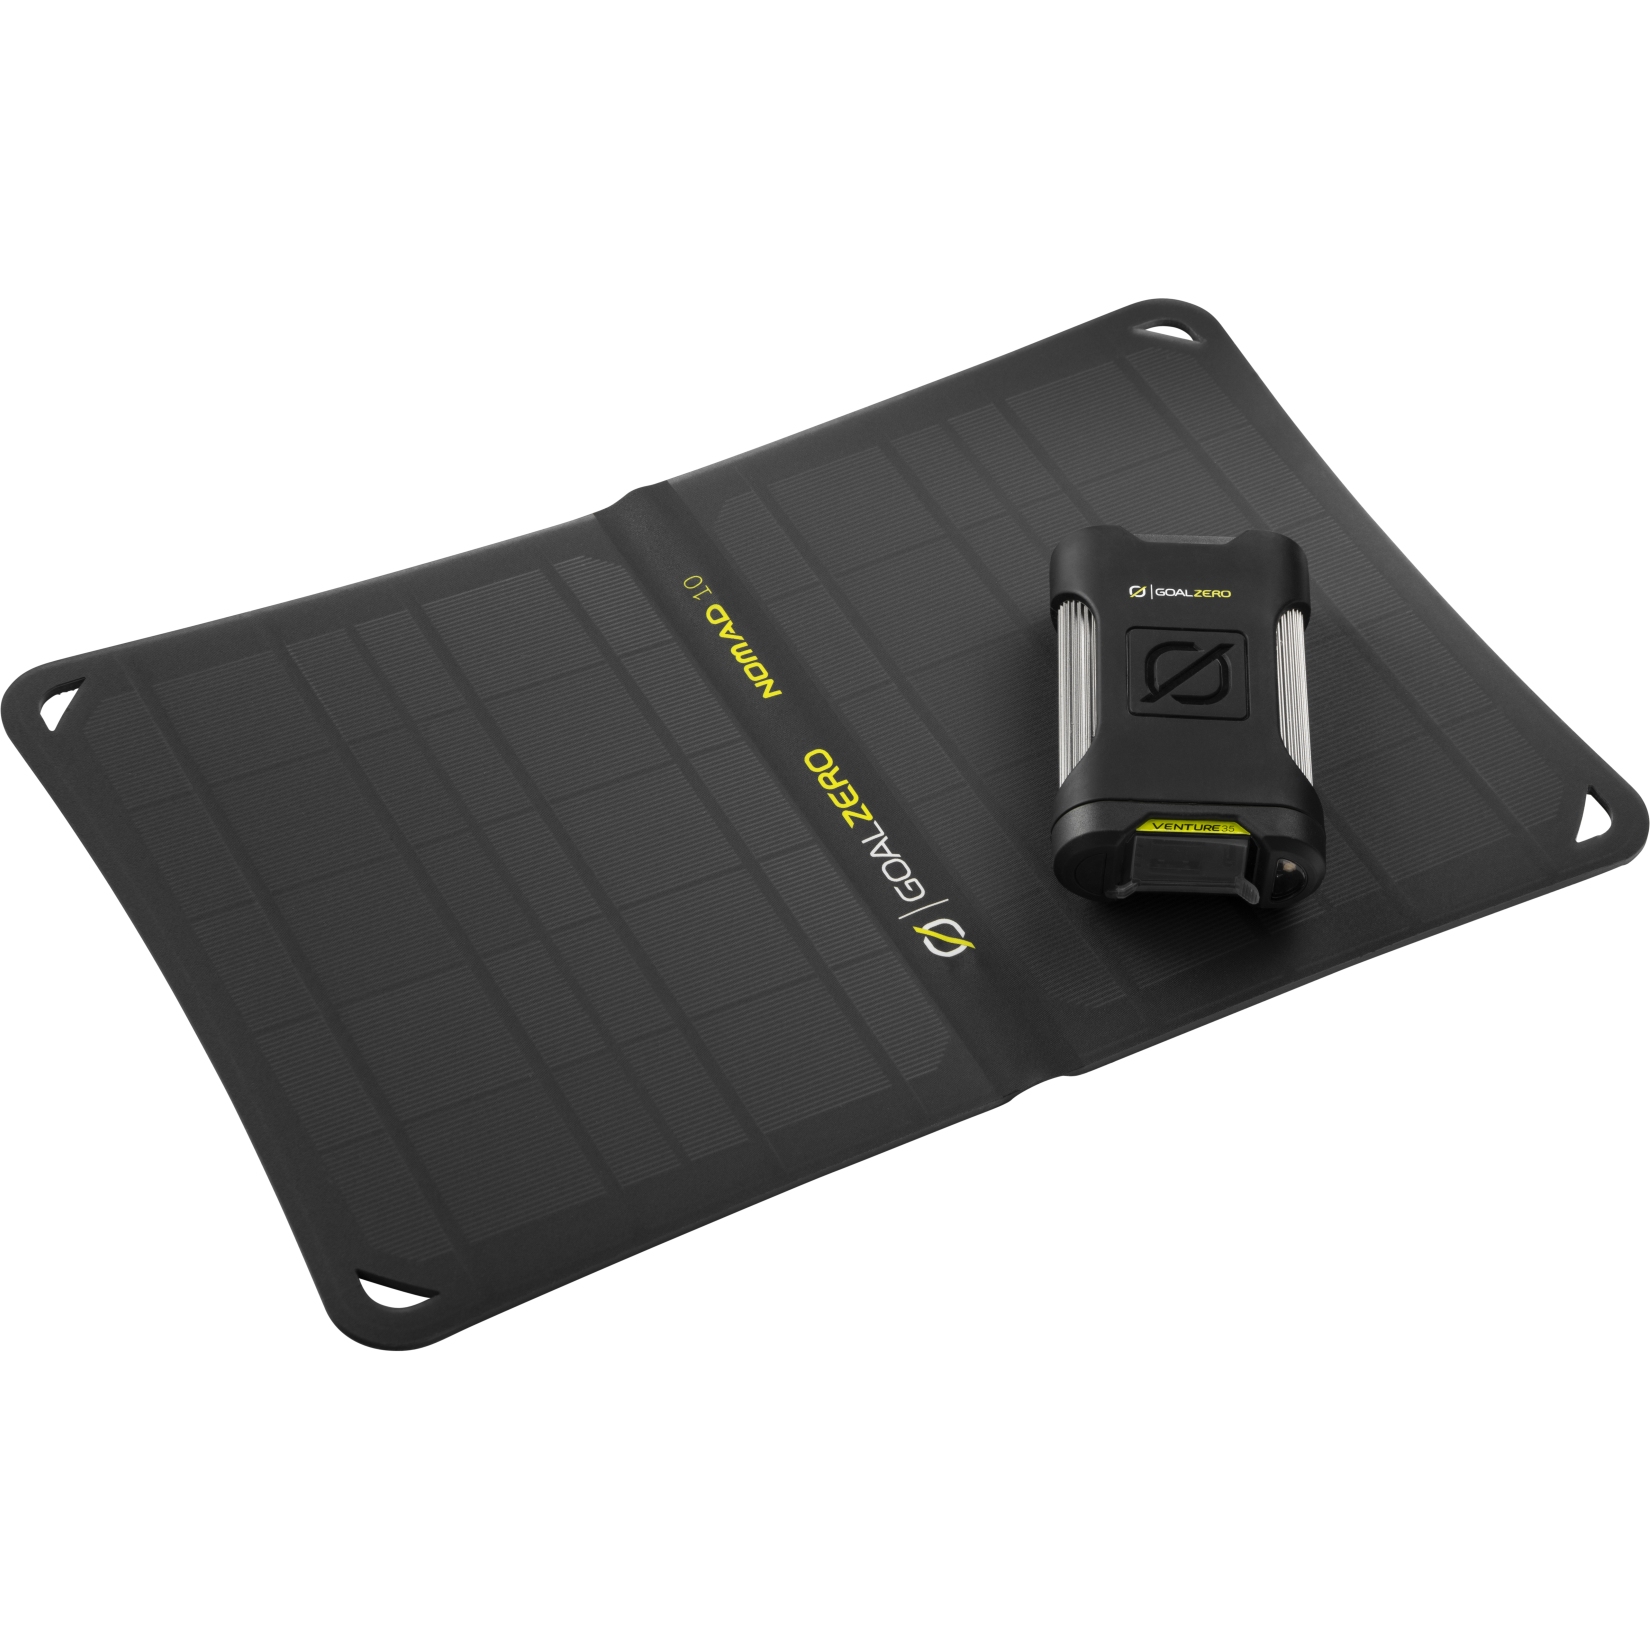 Productfoto van Goal Zero Solar Kit Venture 35 Powerbank + Nomad 10 Zonnepaneel